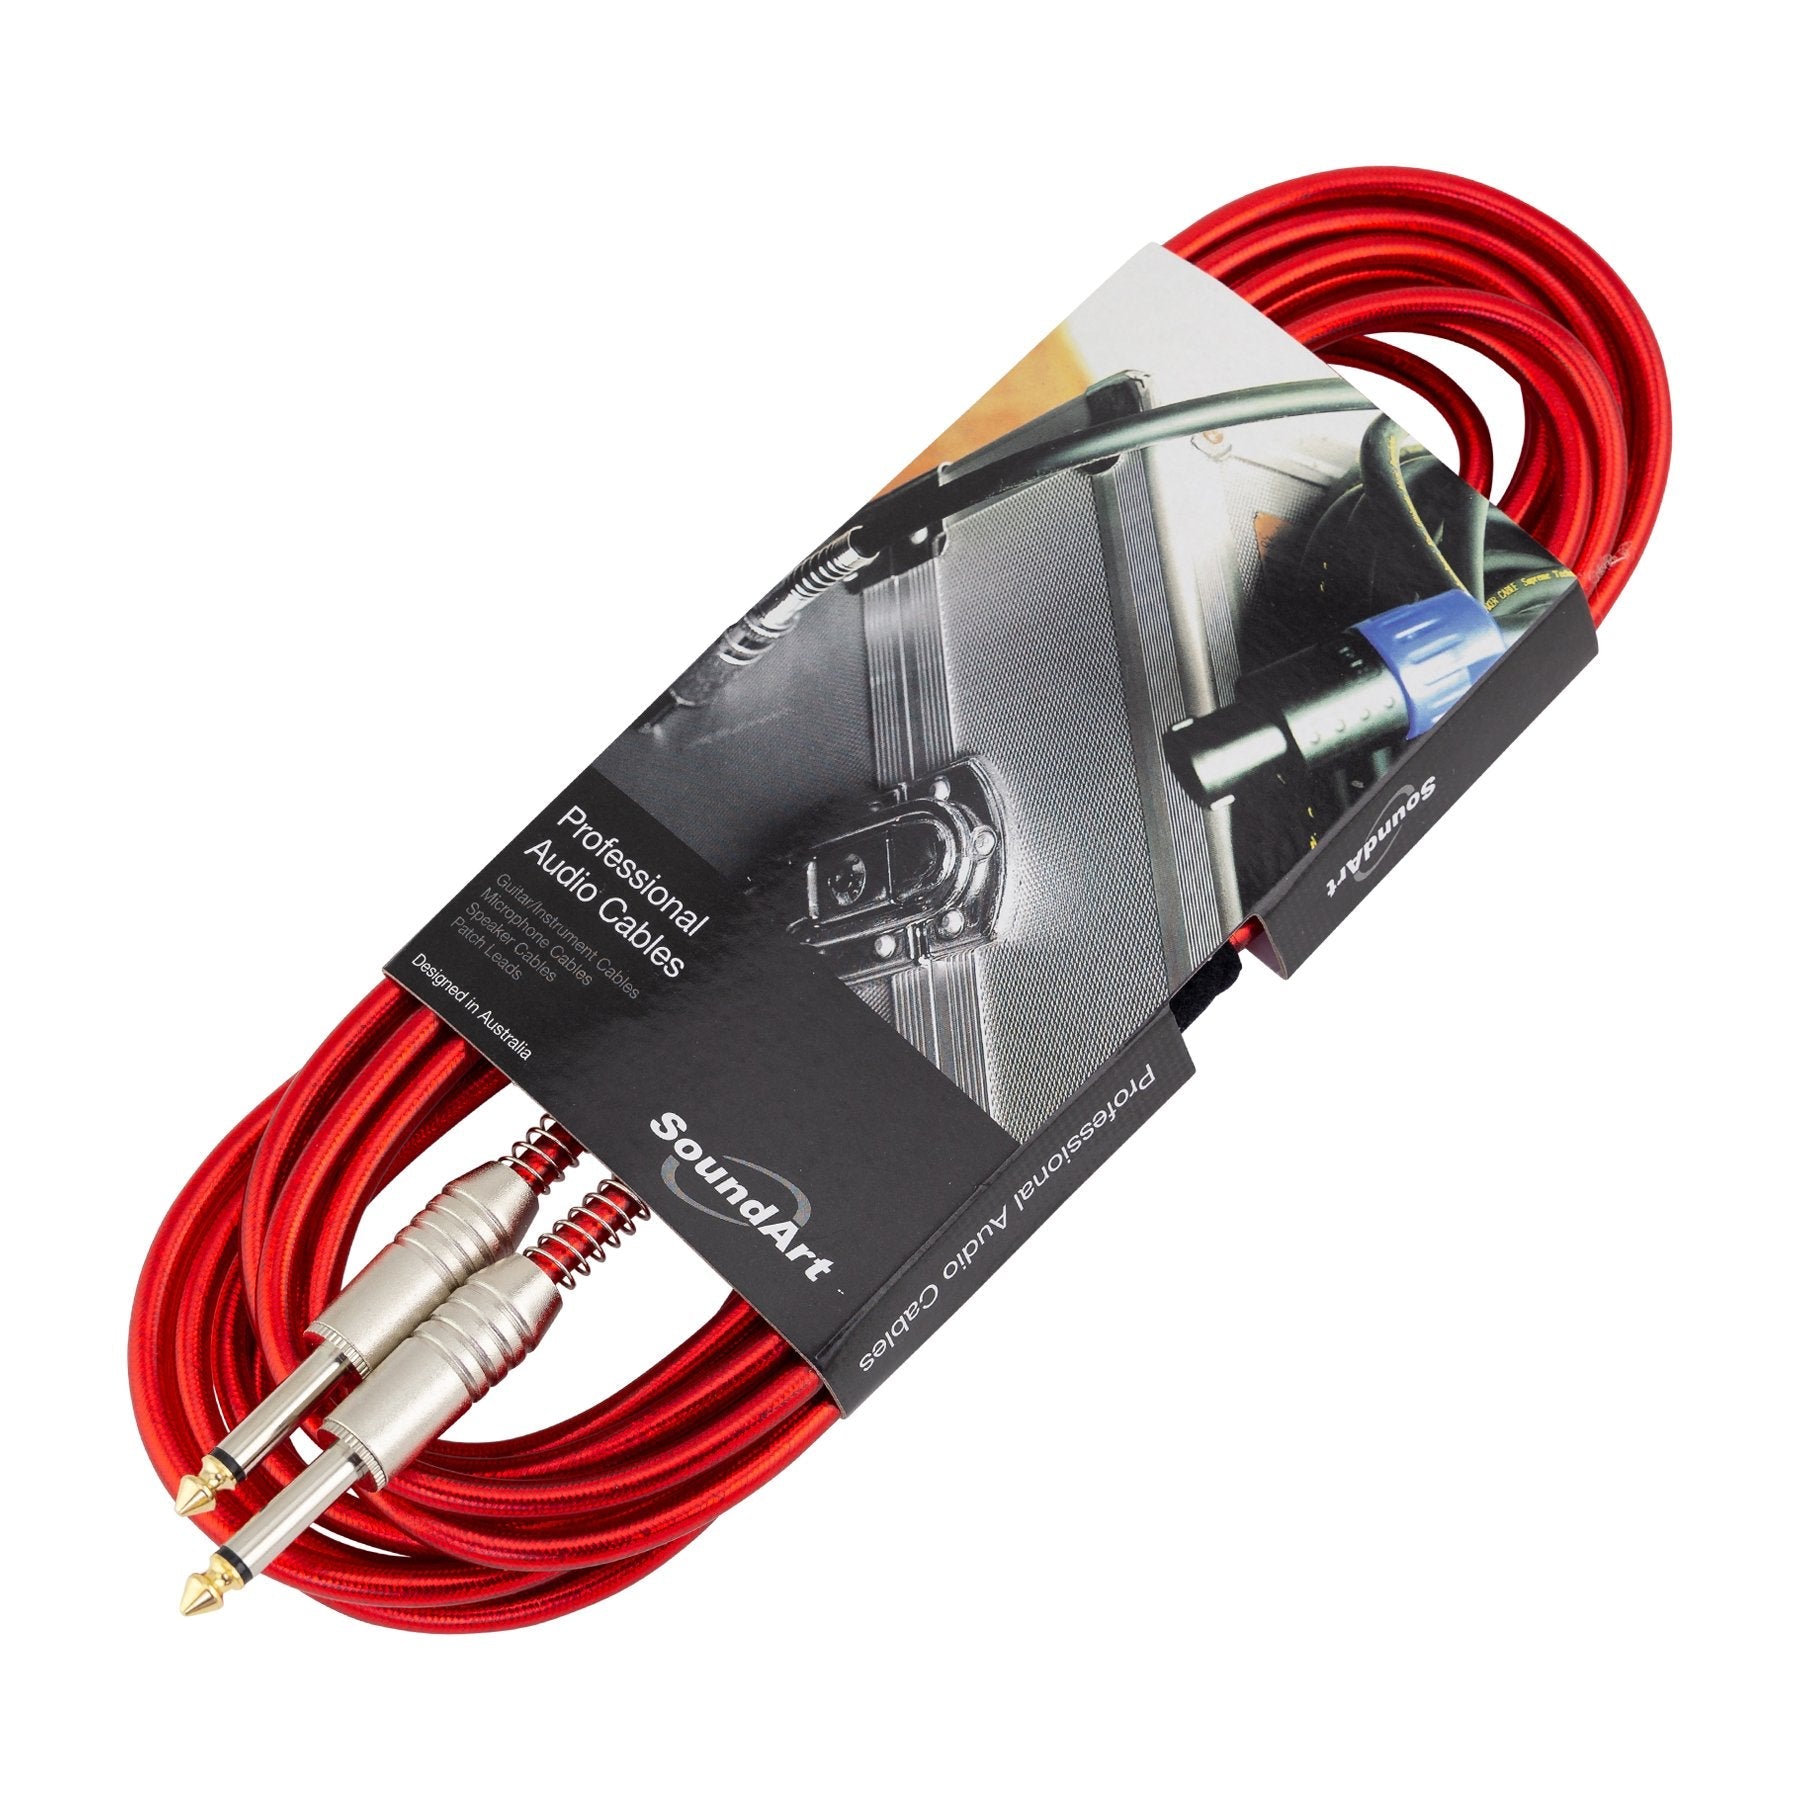 SoundArt SMI-30 Instrument Cable (6m Red)-SMI-30-RED